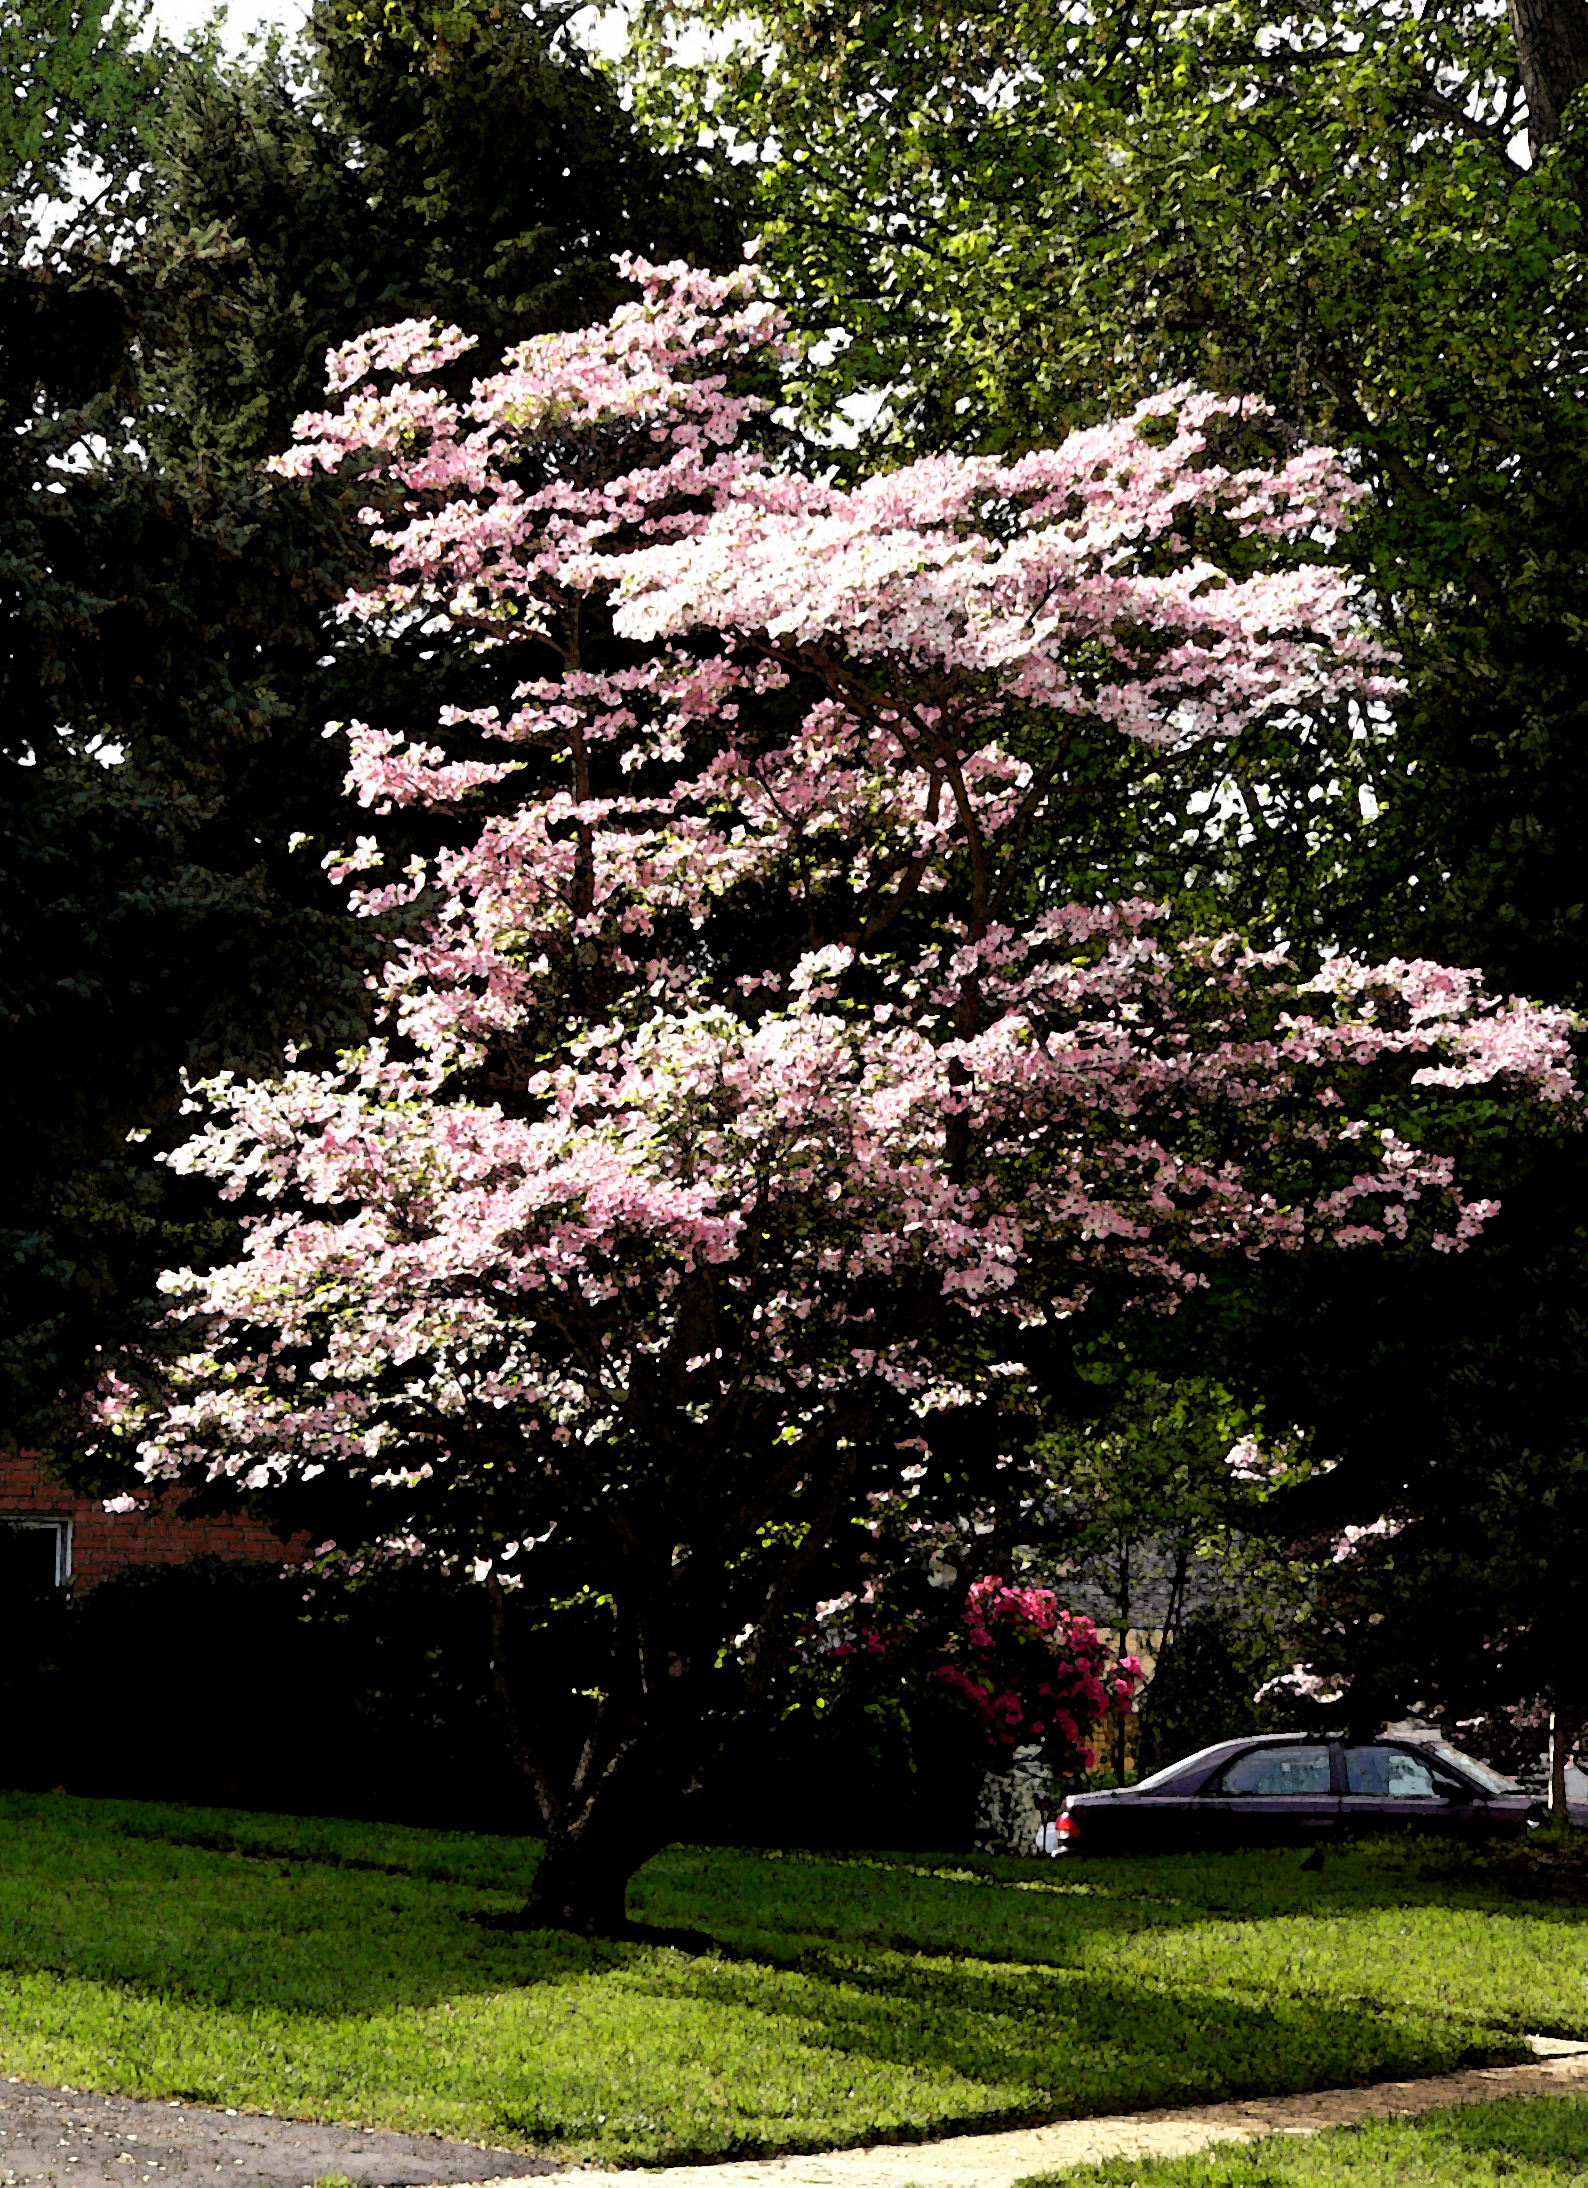 a blooming tree along side of a suburban neighborhood